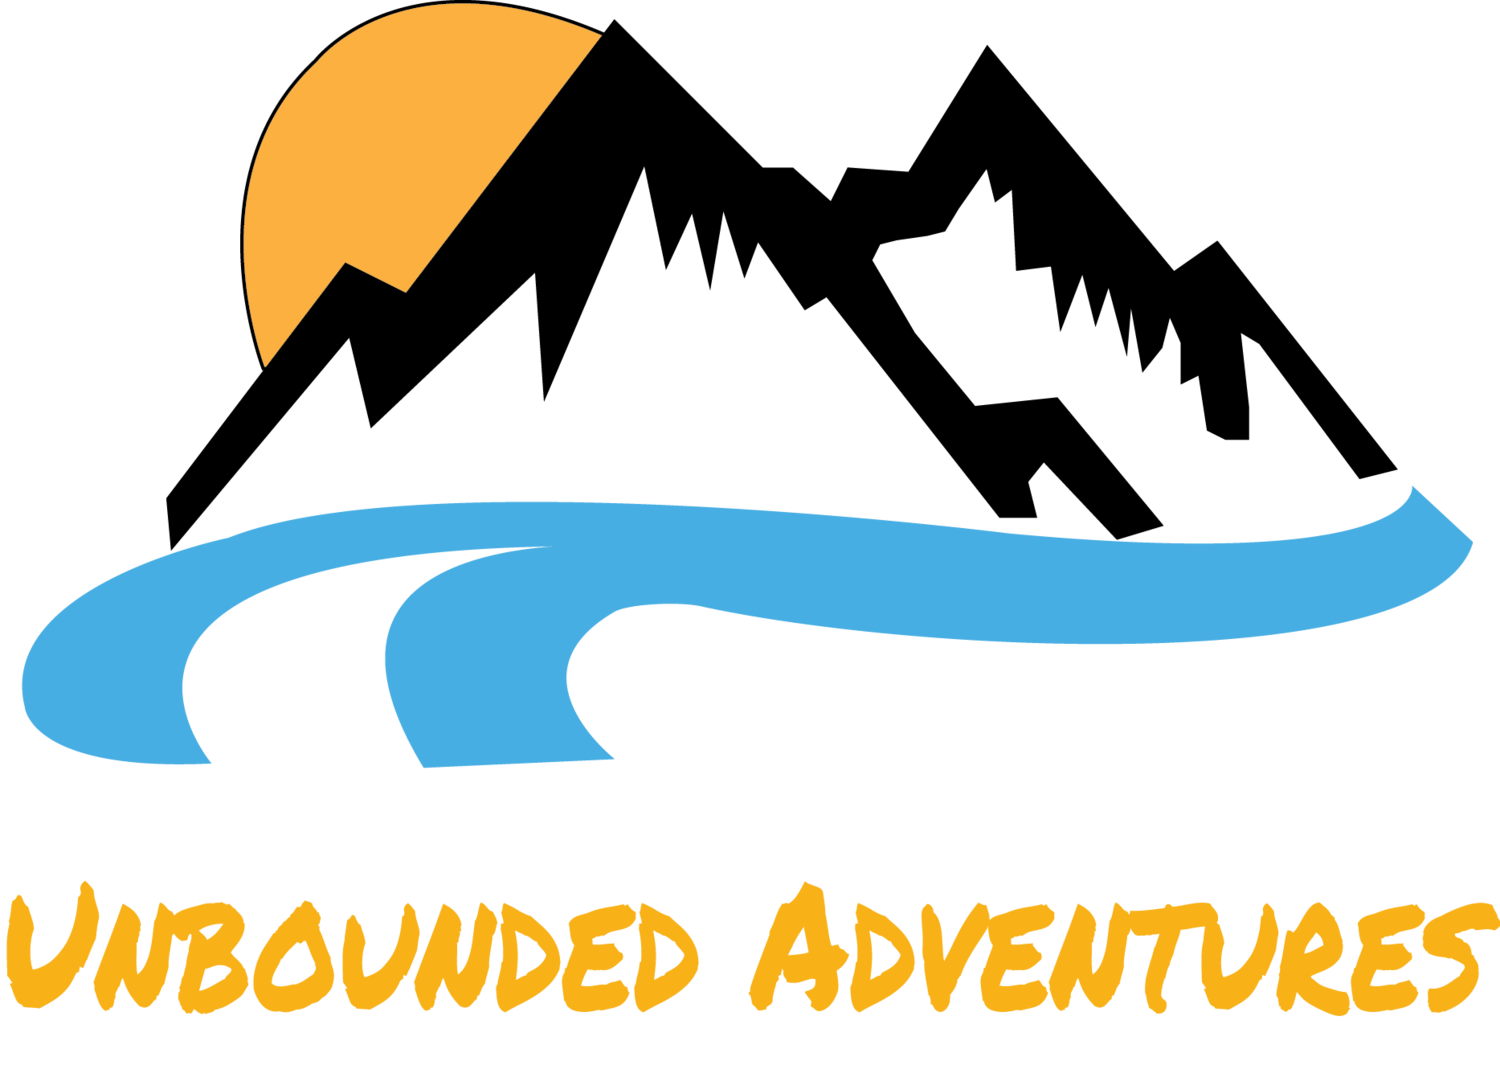 Explorer adventure tourism